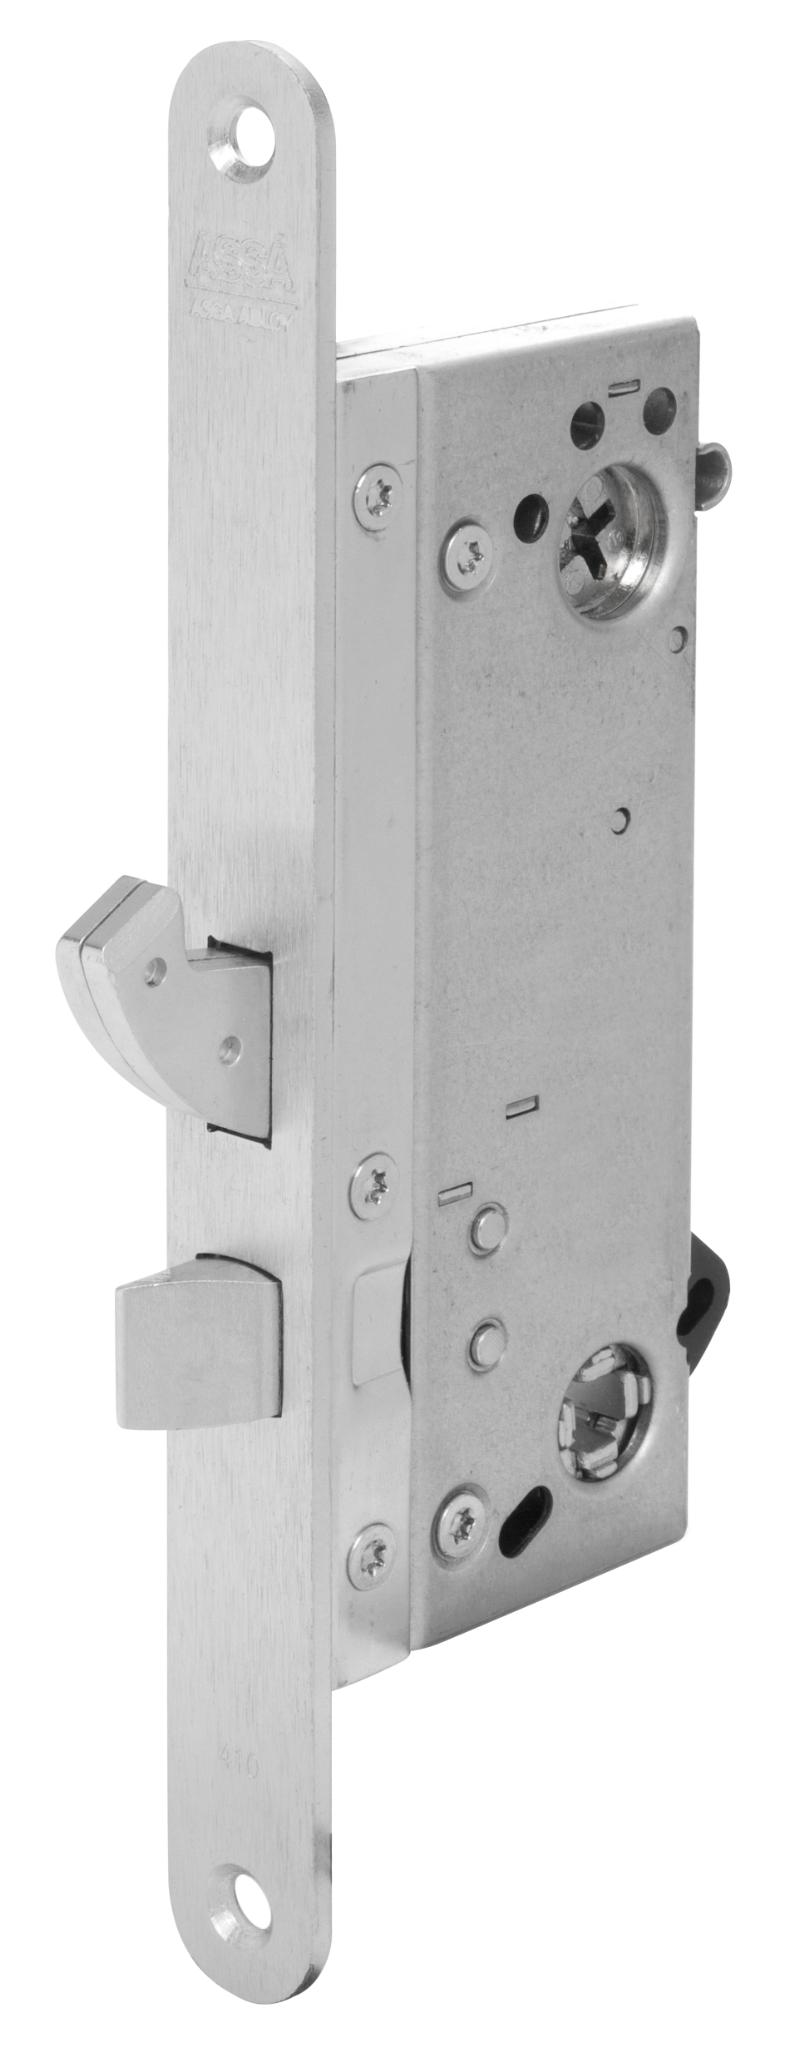 Assa låsbox Connect 410 m/mikrobrytare, vändbar